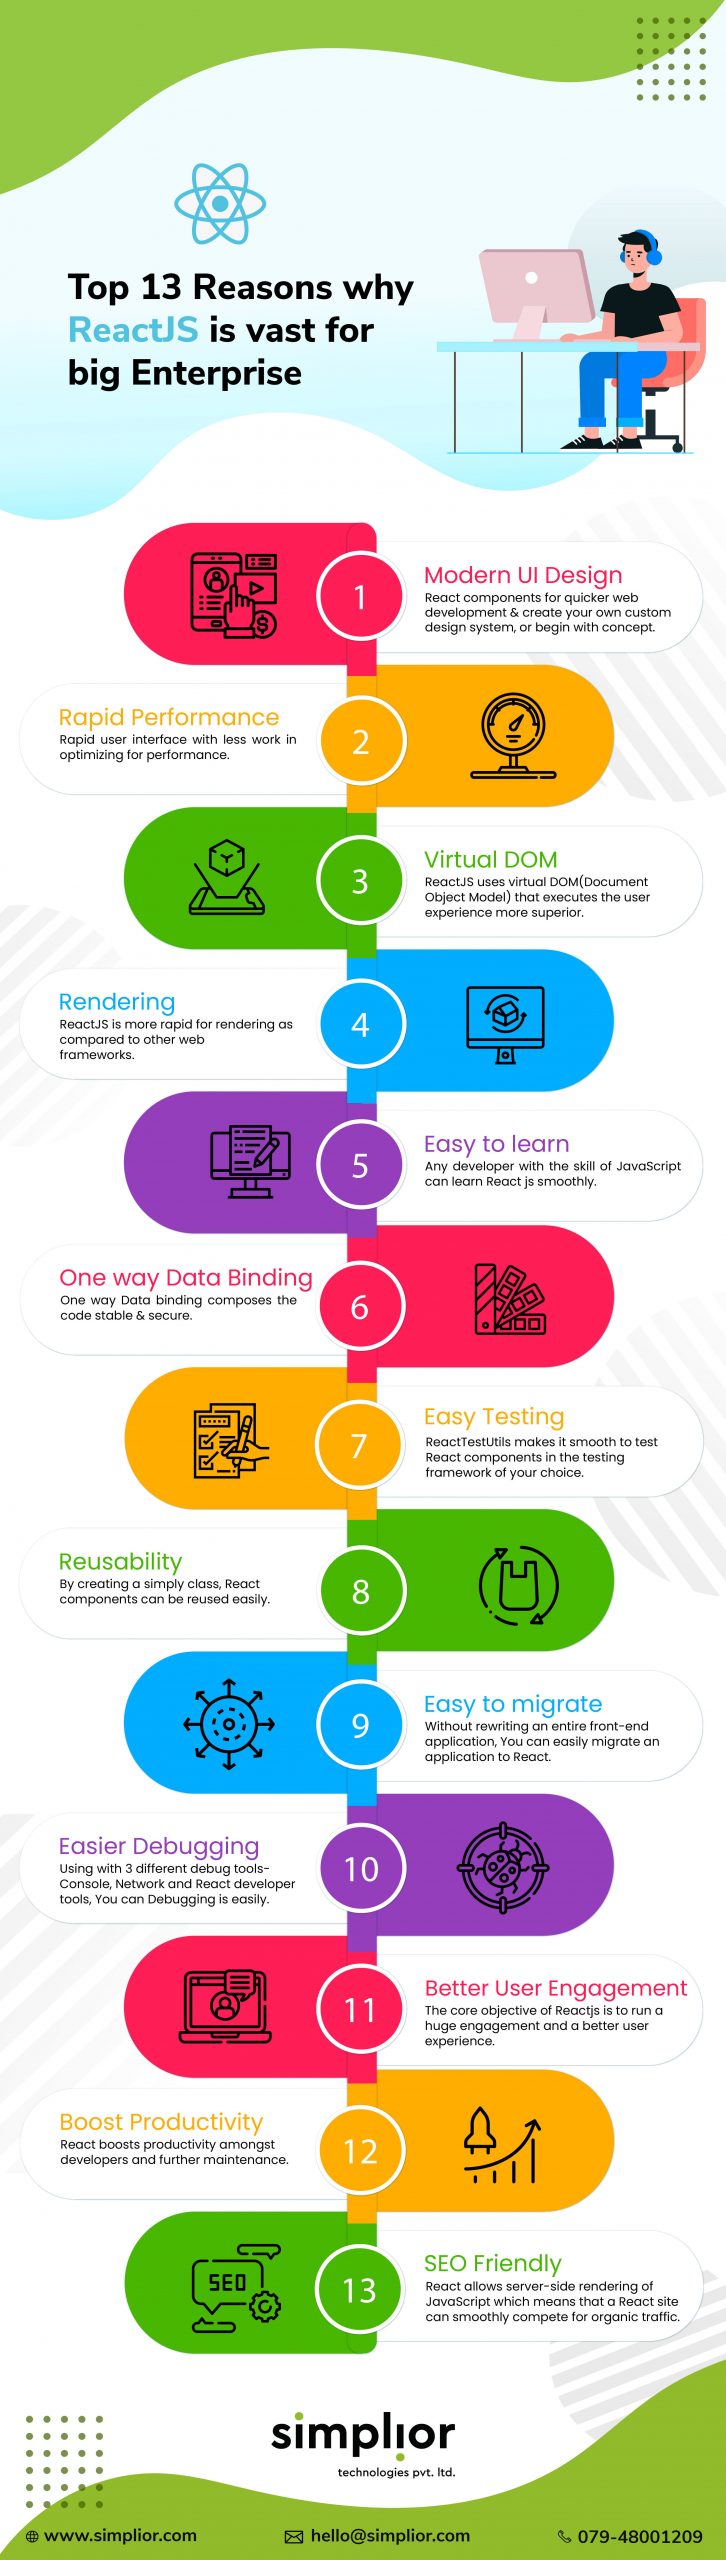 13 reasons to choose reactjs for big enterprise infographic